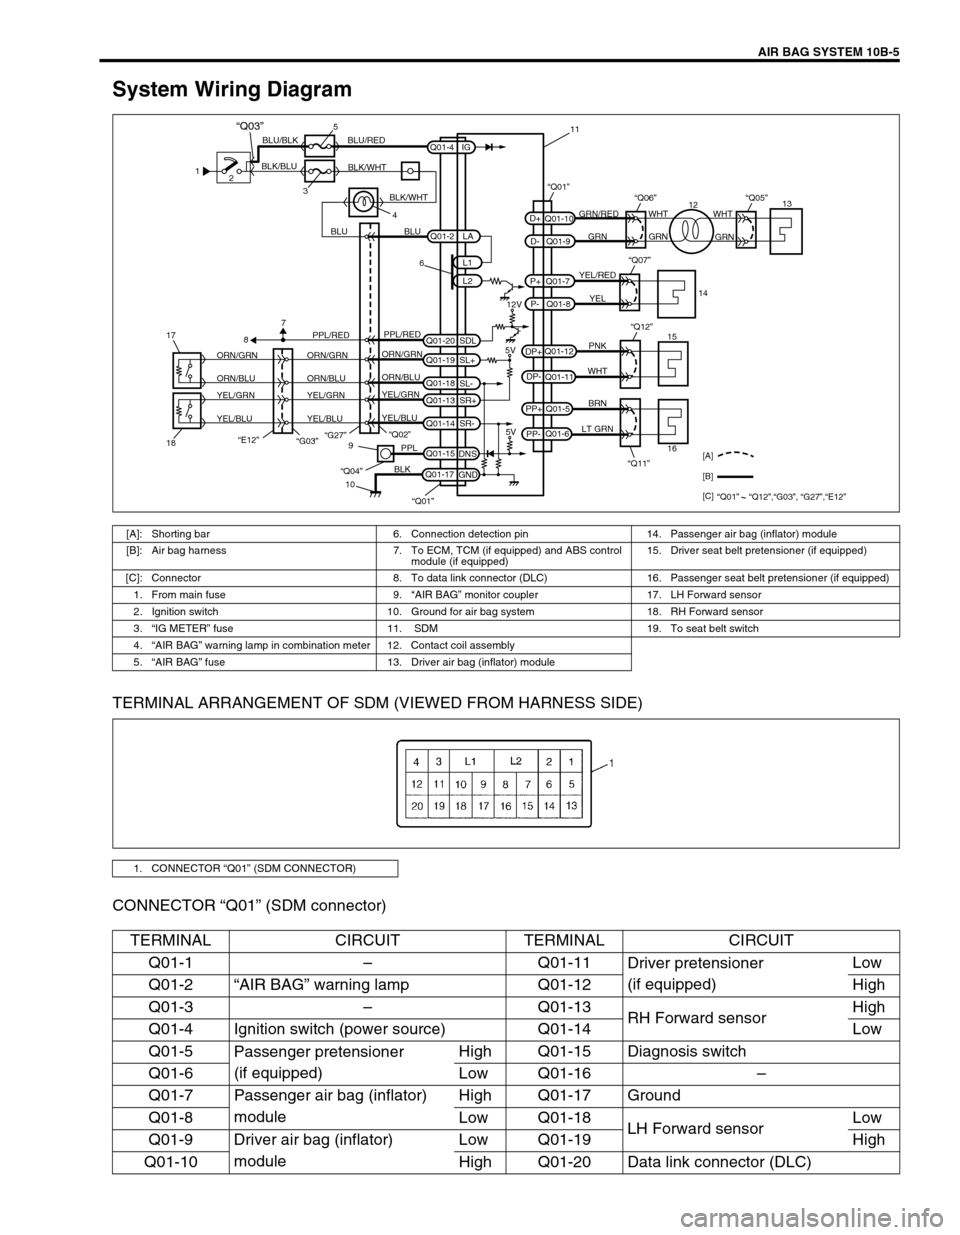 SUZUKI GRAND VITARA 1999 2.G Manual PDF AIR BAG SYSTEM 10B-5
System Wiring Diagram
TERMINAL ARRANGEMENT OF SDM (VIEWED FROM HARNESS SIDE)
CONNECTOR “Q01” (SDM connector)
1
2
35
4 BLK/BLUBLU/BLK BLU/RED
BLK/WHT
BLU BLUGRN/RED
GRN GRNWHT 